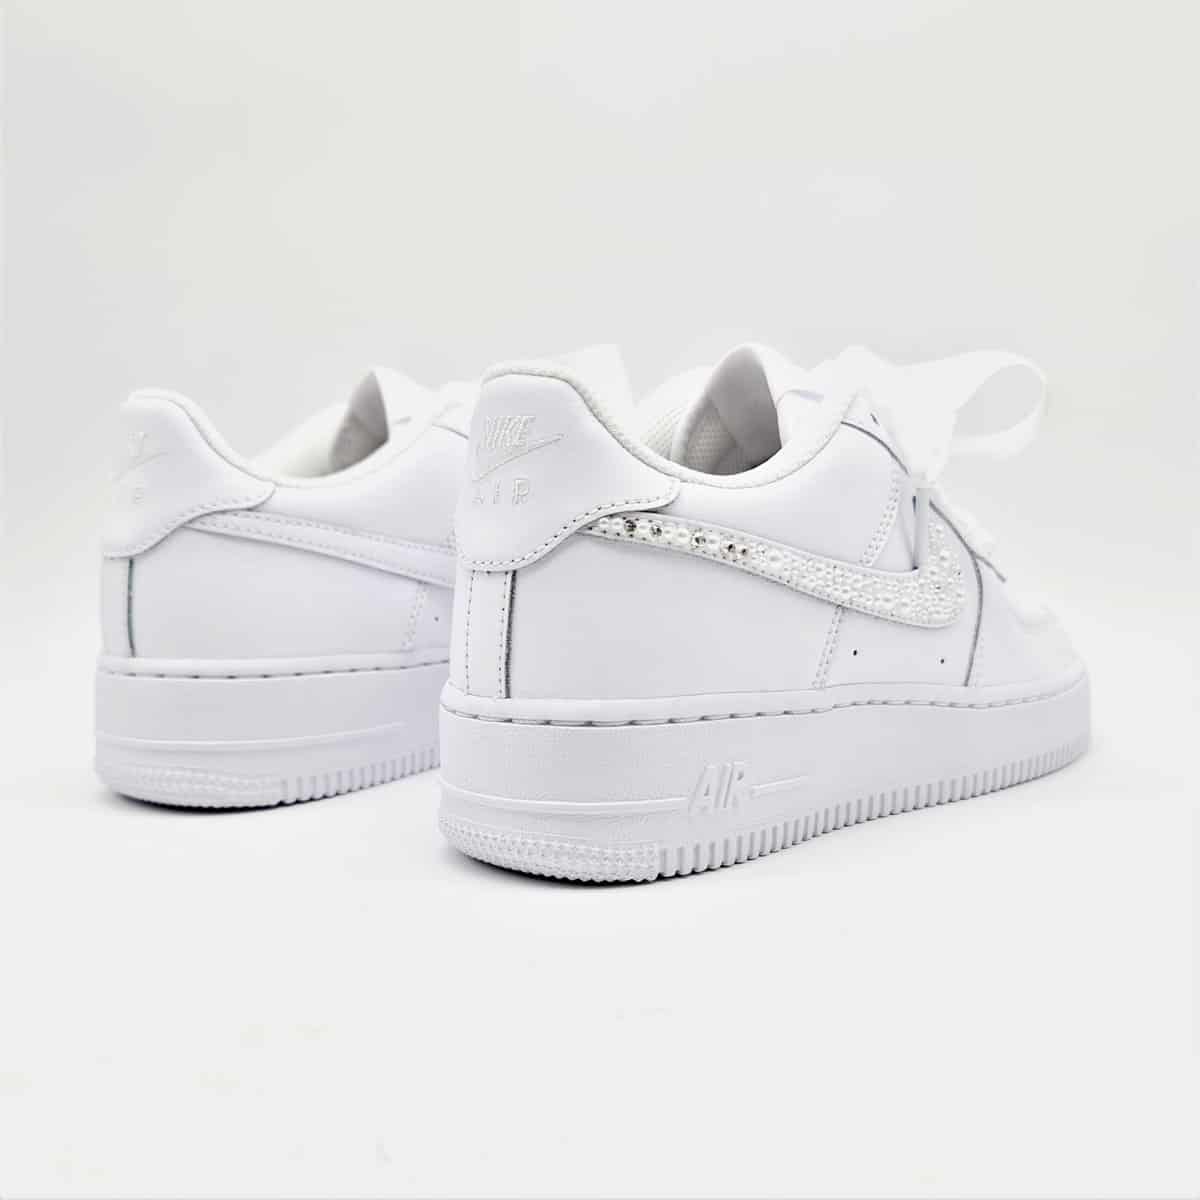 Nike Air Force 1 custom - Double G Customs - Custom Sneakers